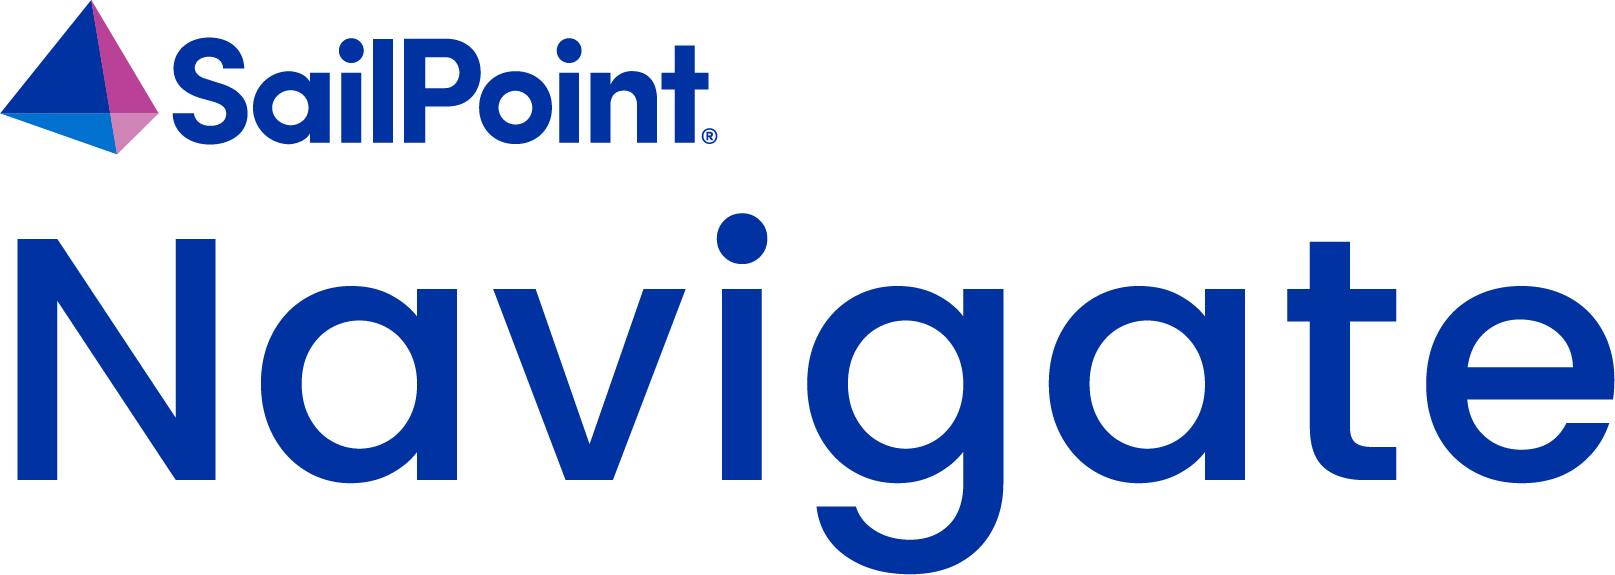 SailPoint-Navigate-Logo-Lockup.png